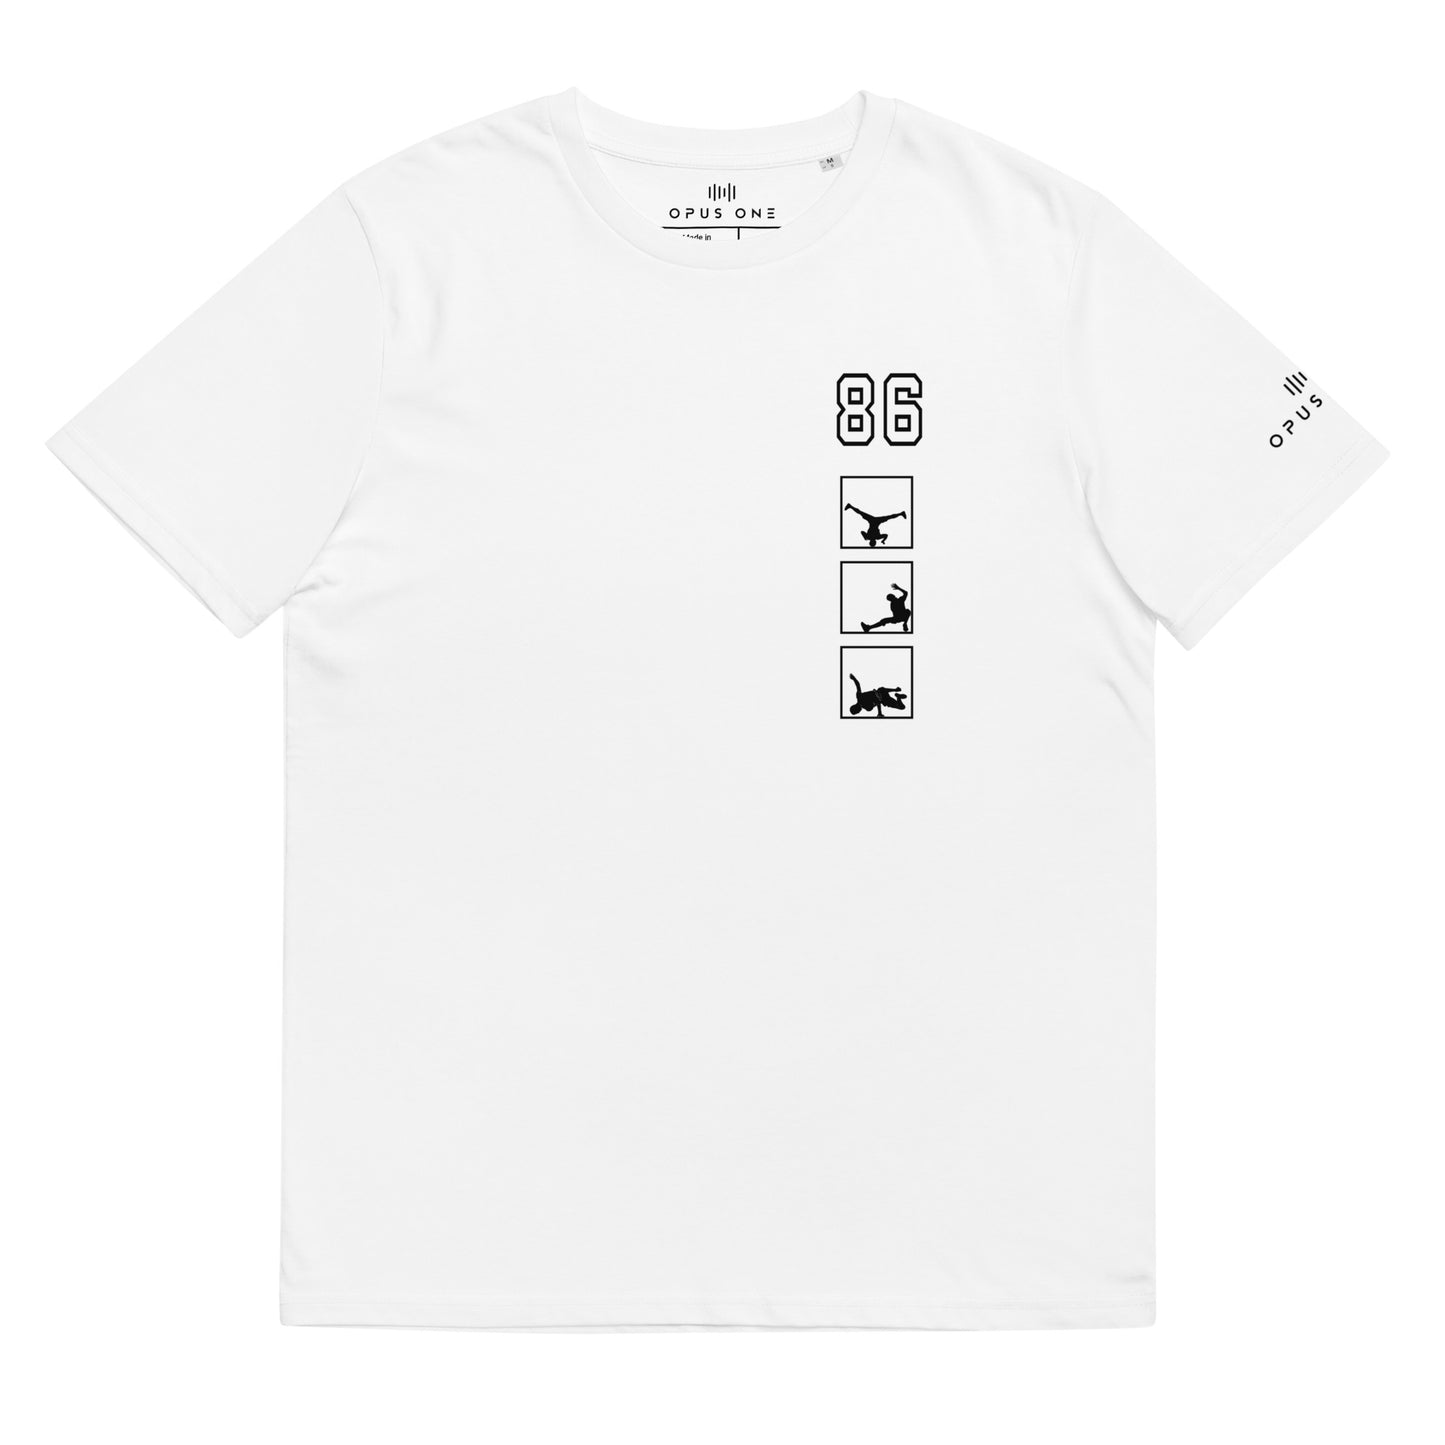 Ltd (Breakdance v1) Unisex organic cotton t-shirt (Black Text)